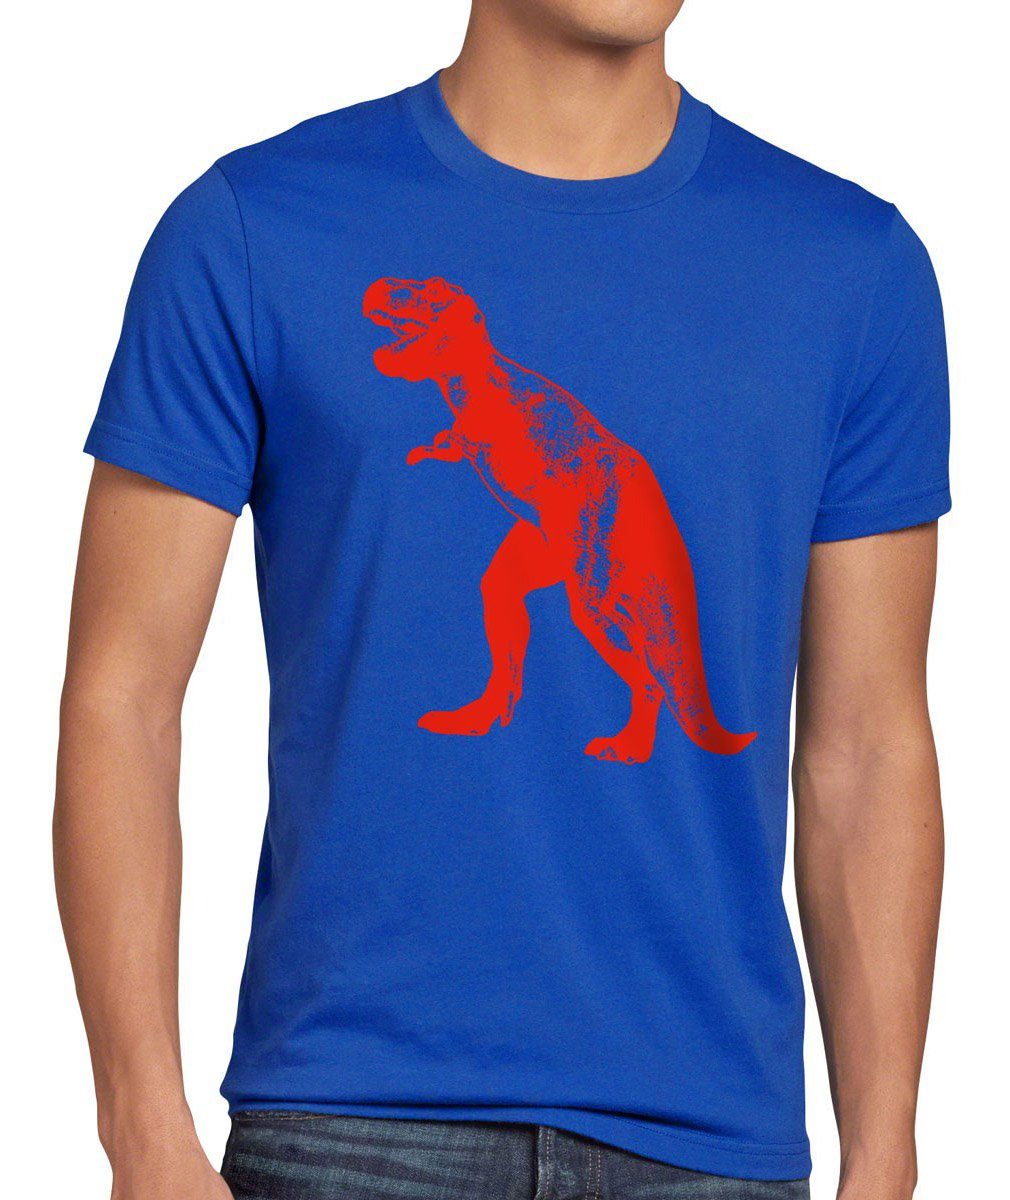 style3 Print-Shirt Herren T-Shirt Dinosaurier Rex Sheldon Cooper Evolution big bang Dino Theory blau